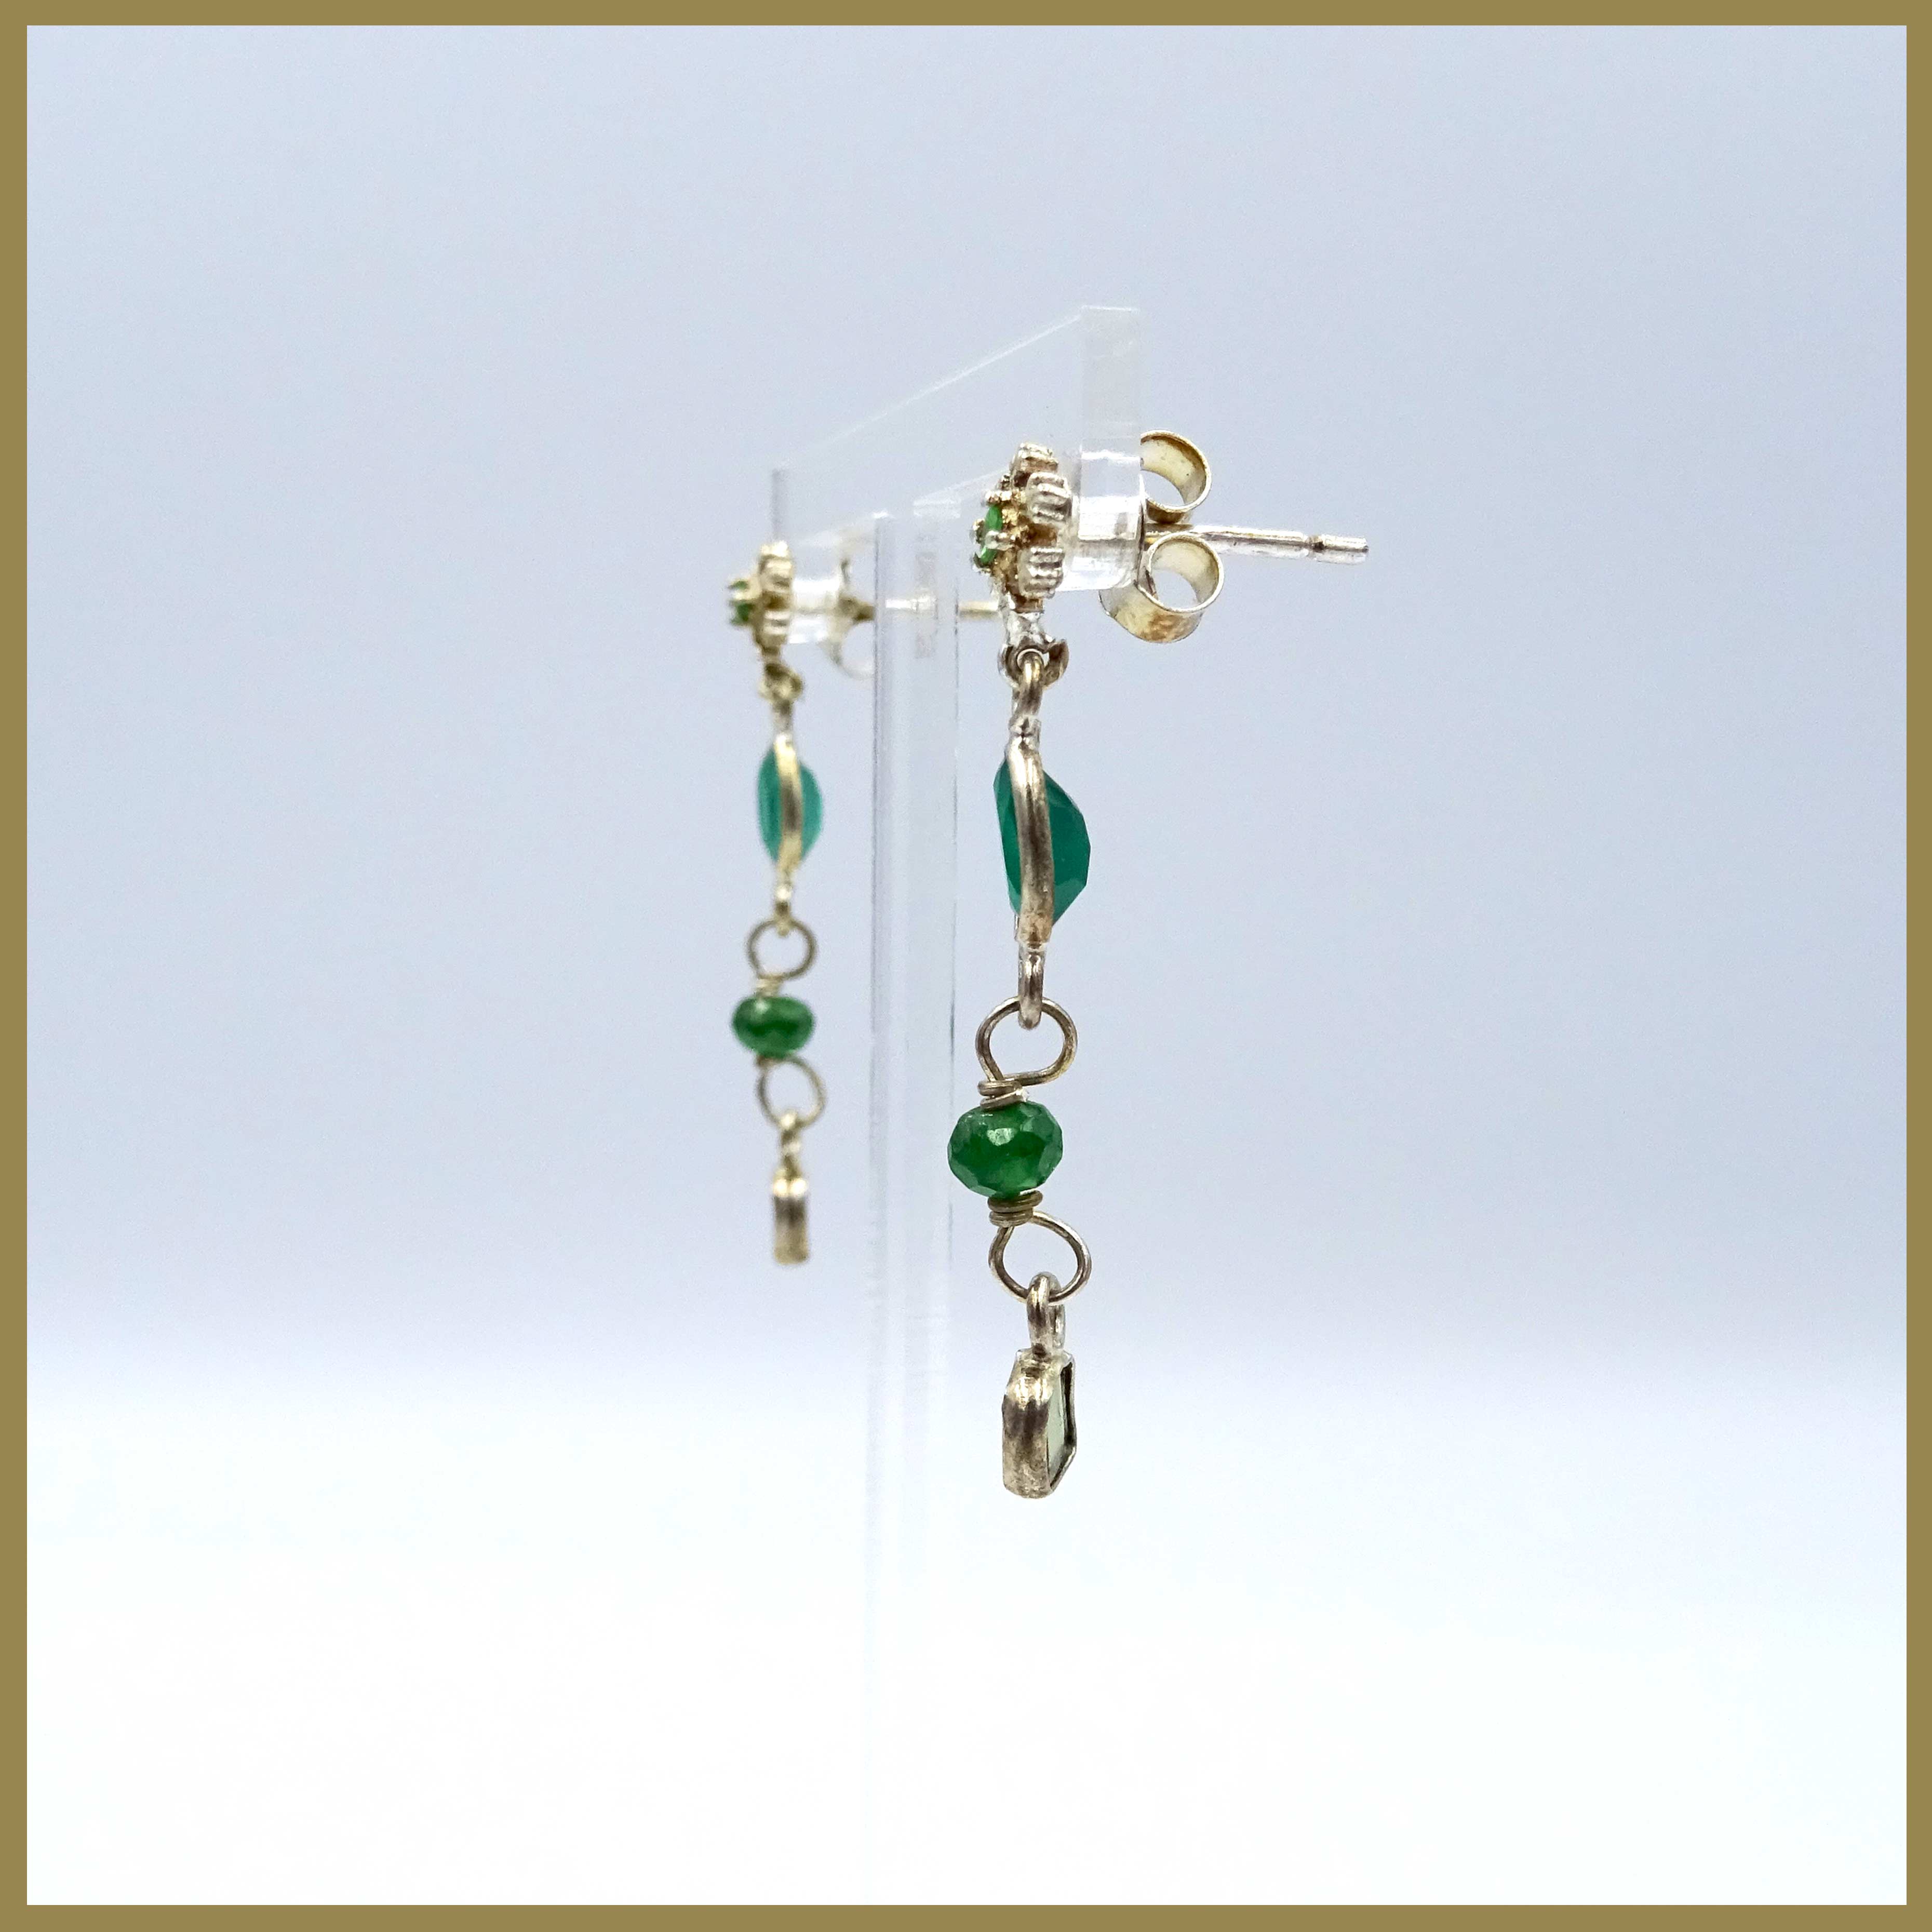 Silver Snowflake Earrings with Green Aventurine, Savorite, and Tourmaline Gemstones